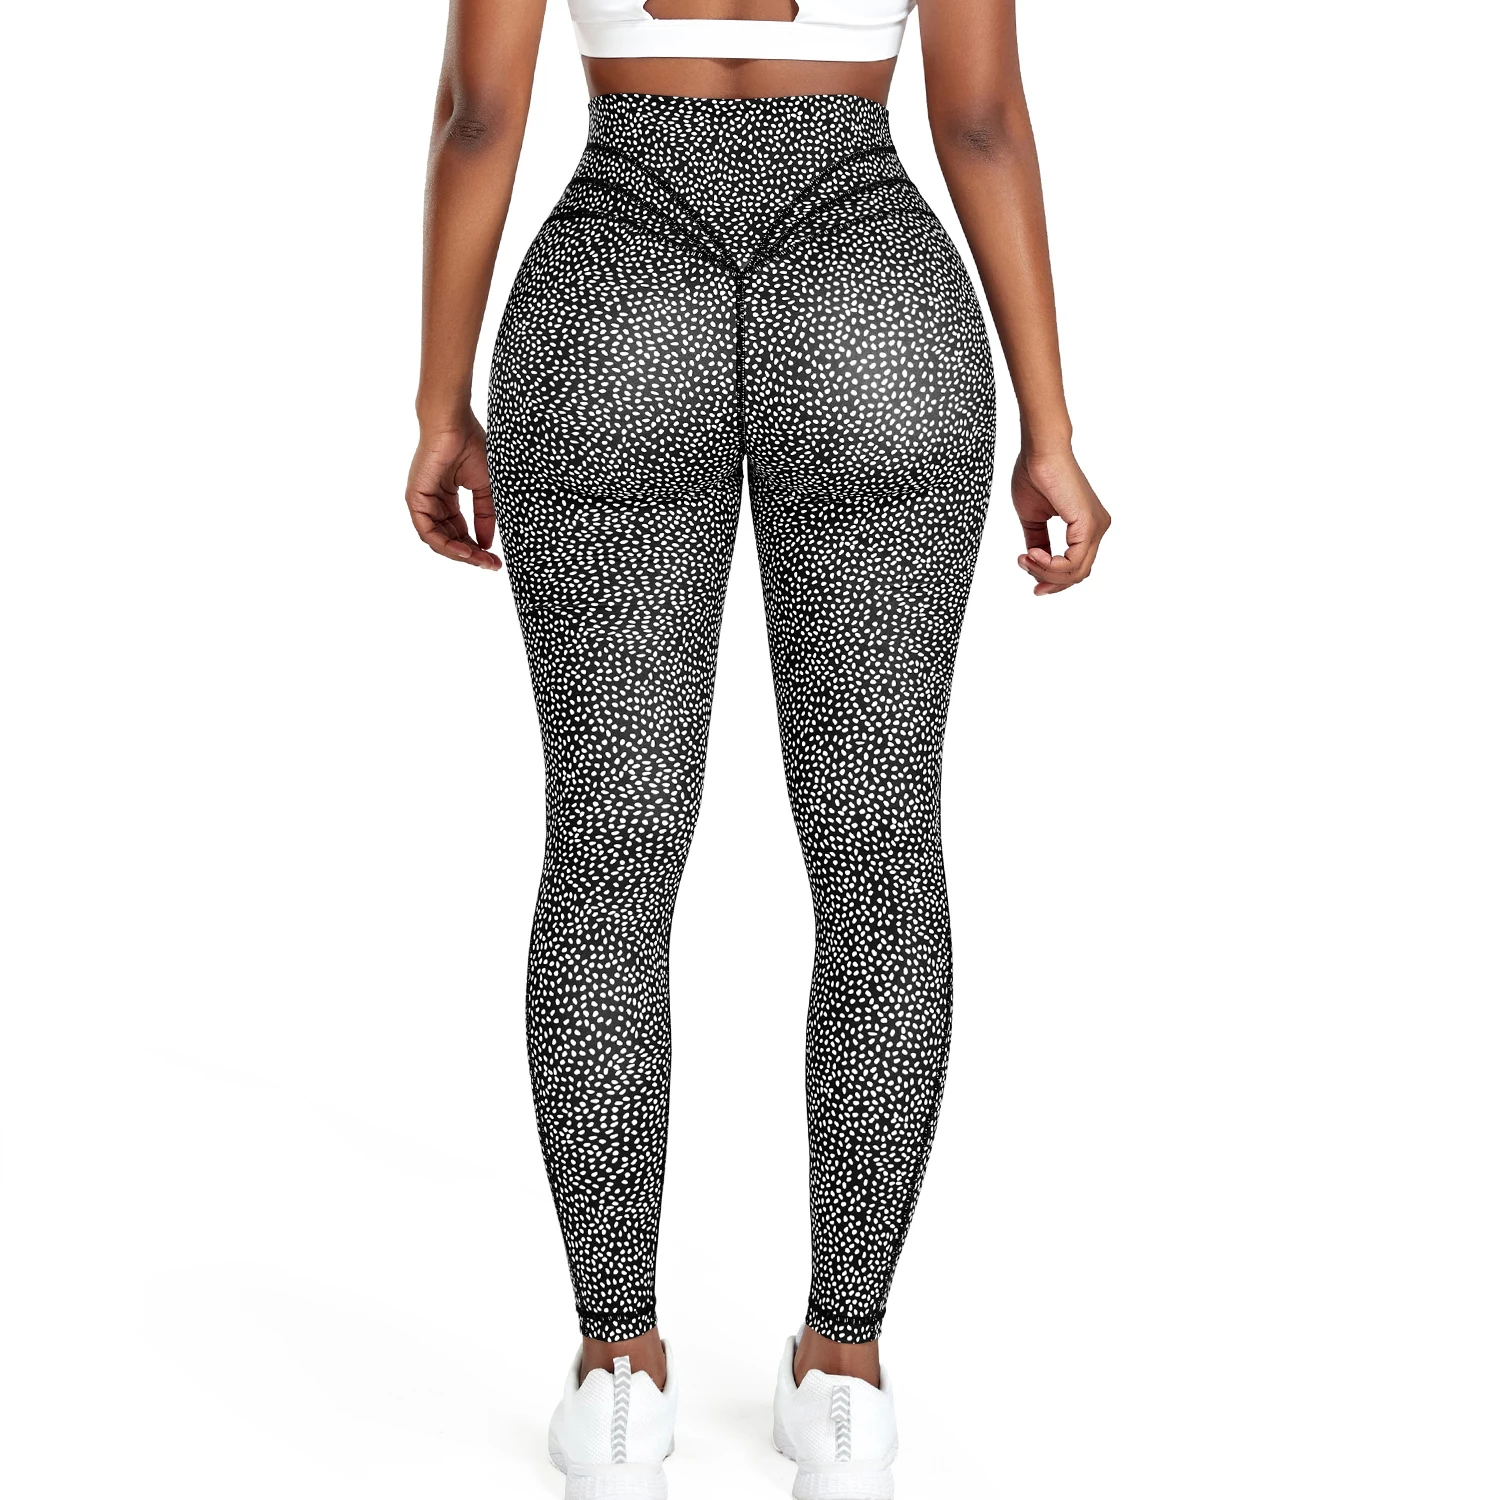 

Polka Dot Printed Leggings Fitness Women High Waist Push Up Yoga Pants Gym Elastic Running Tight Trouser Sport Cycling Clothing